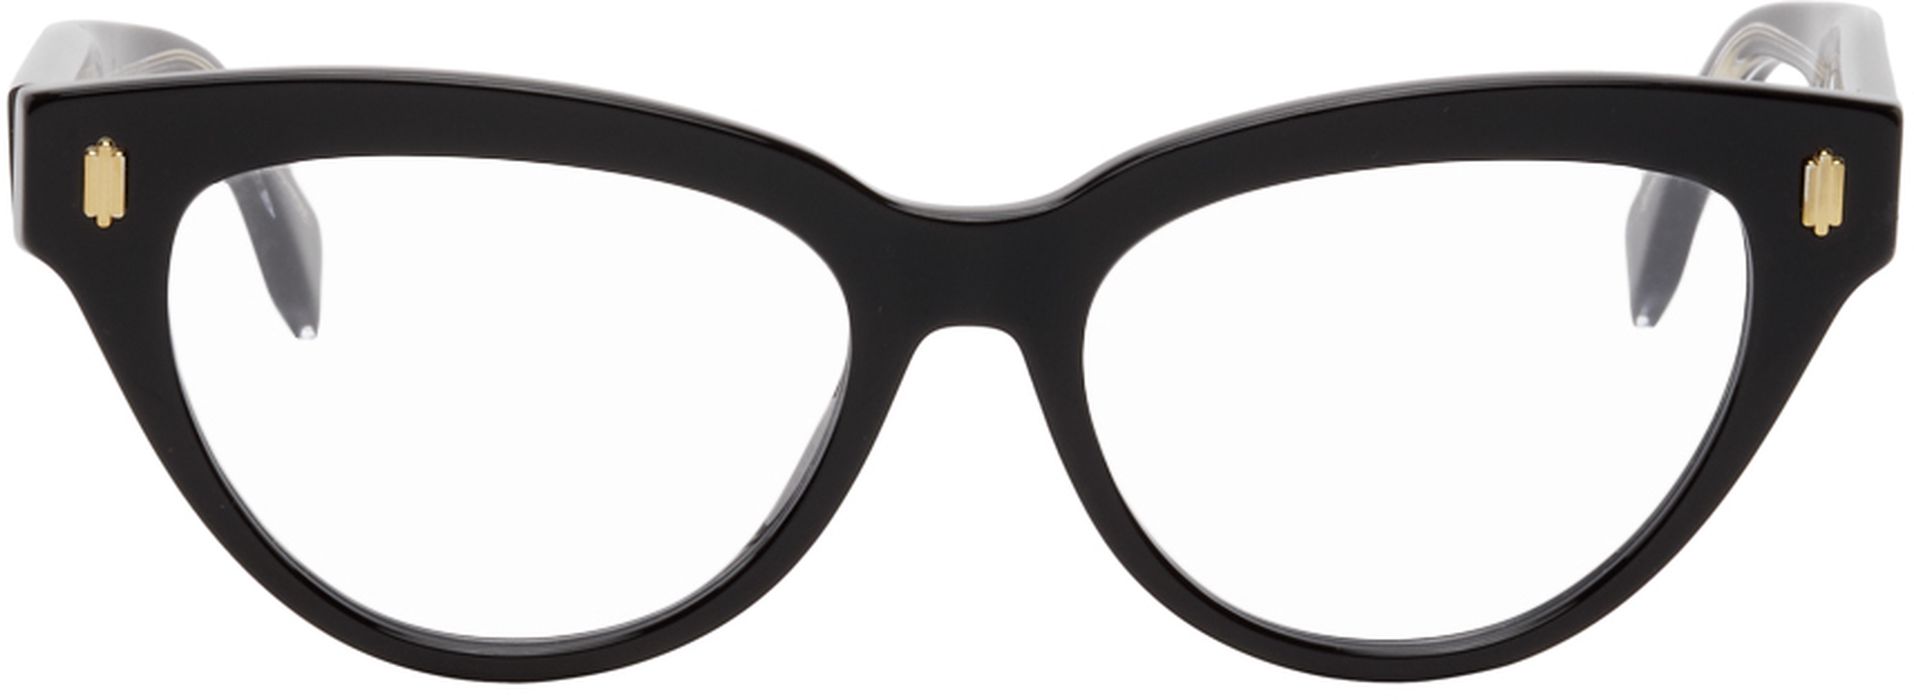 Fendi Black Cat-Eye Glasses